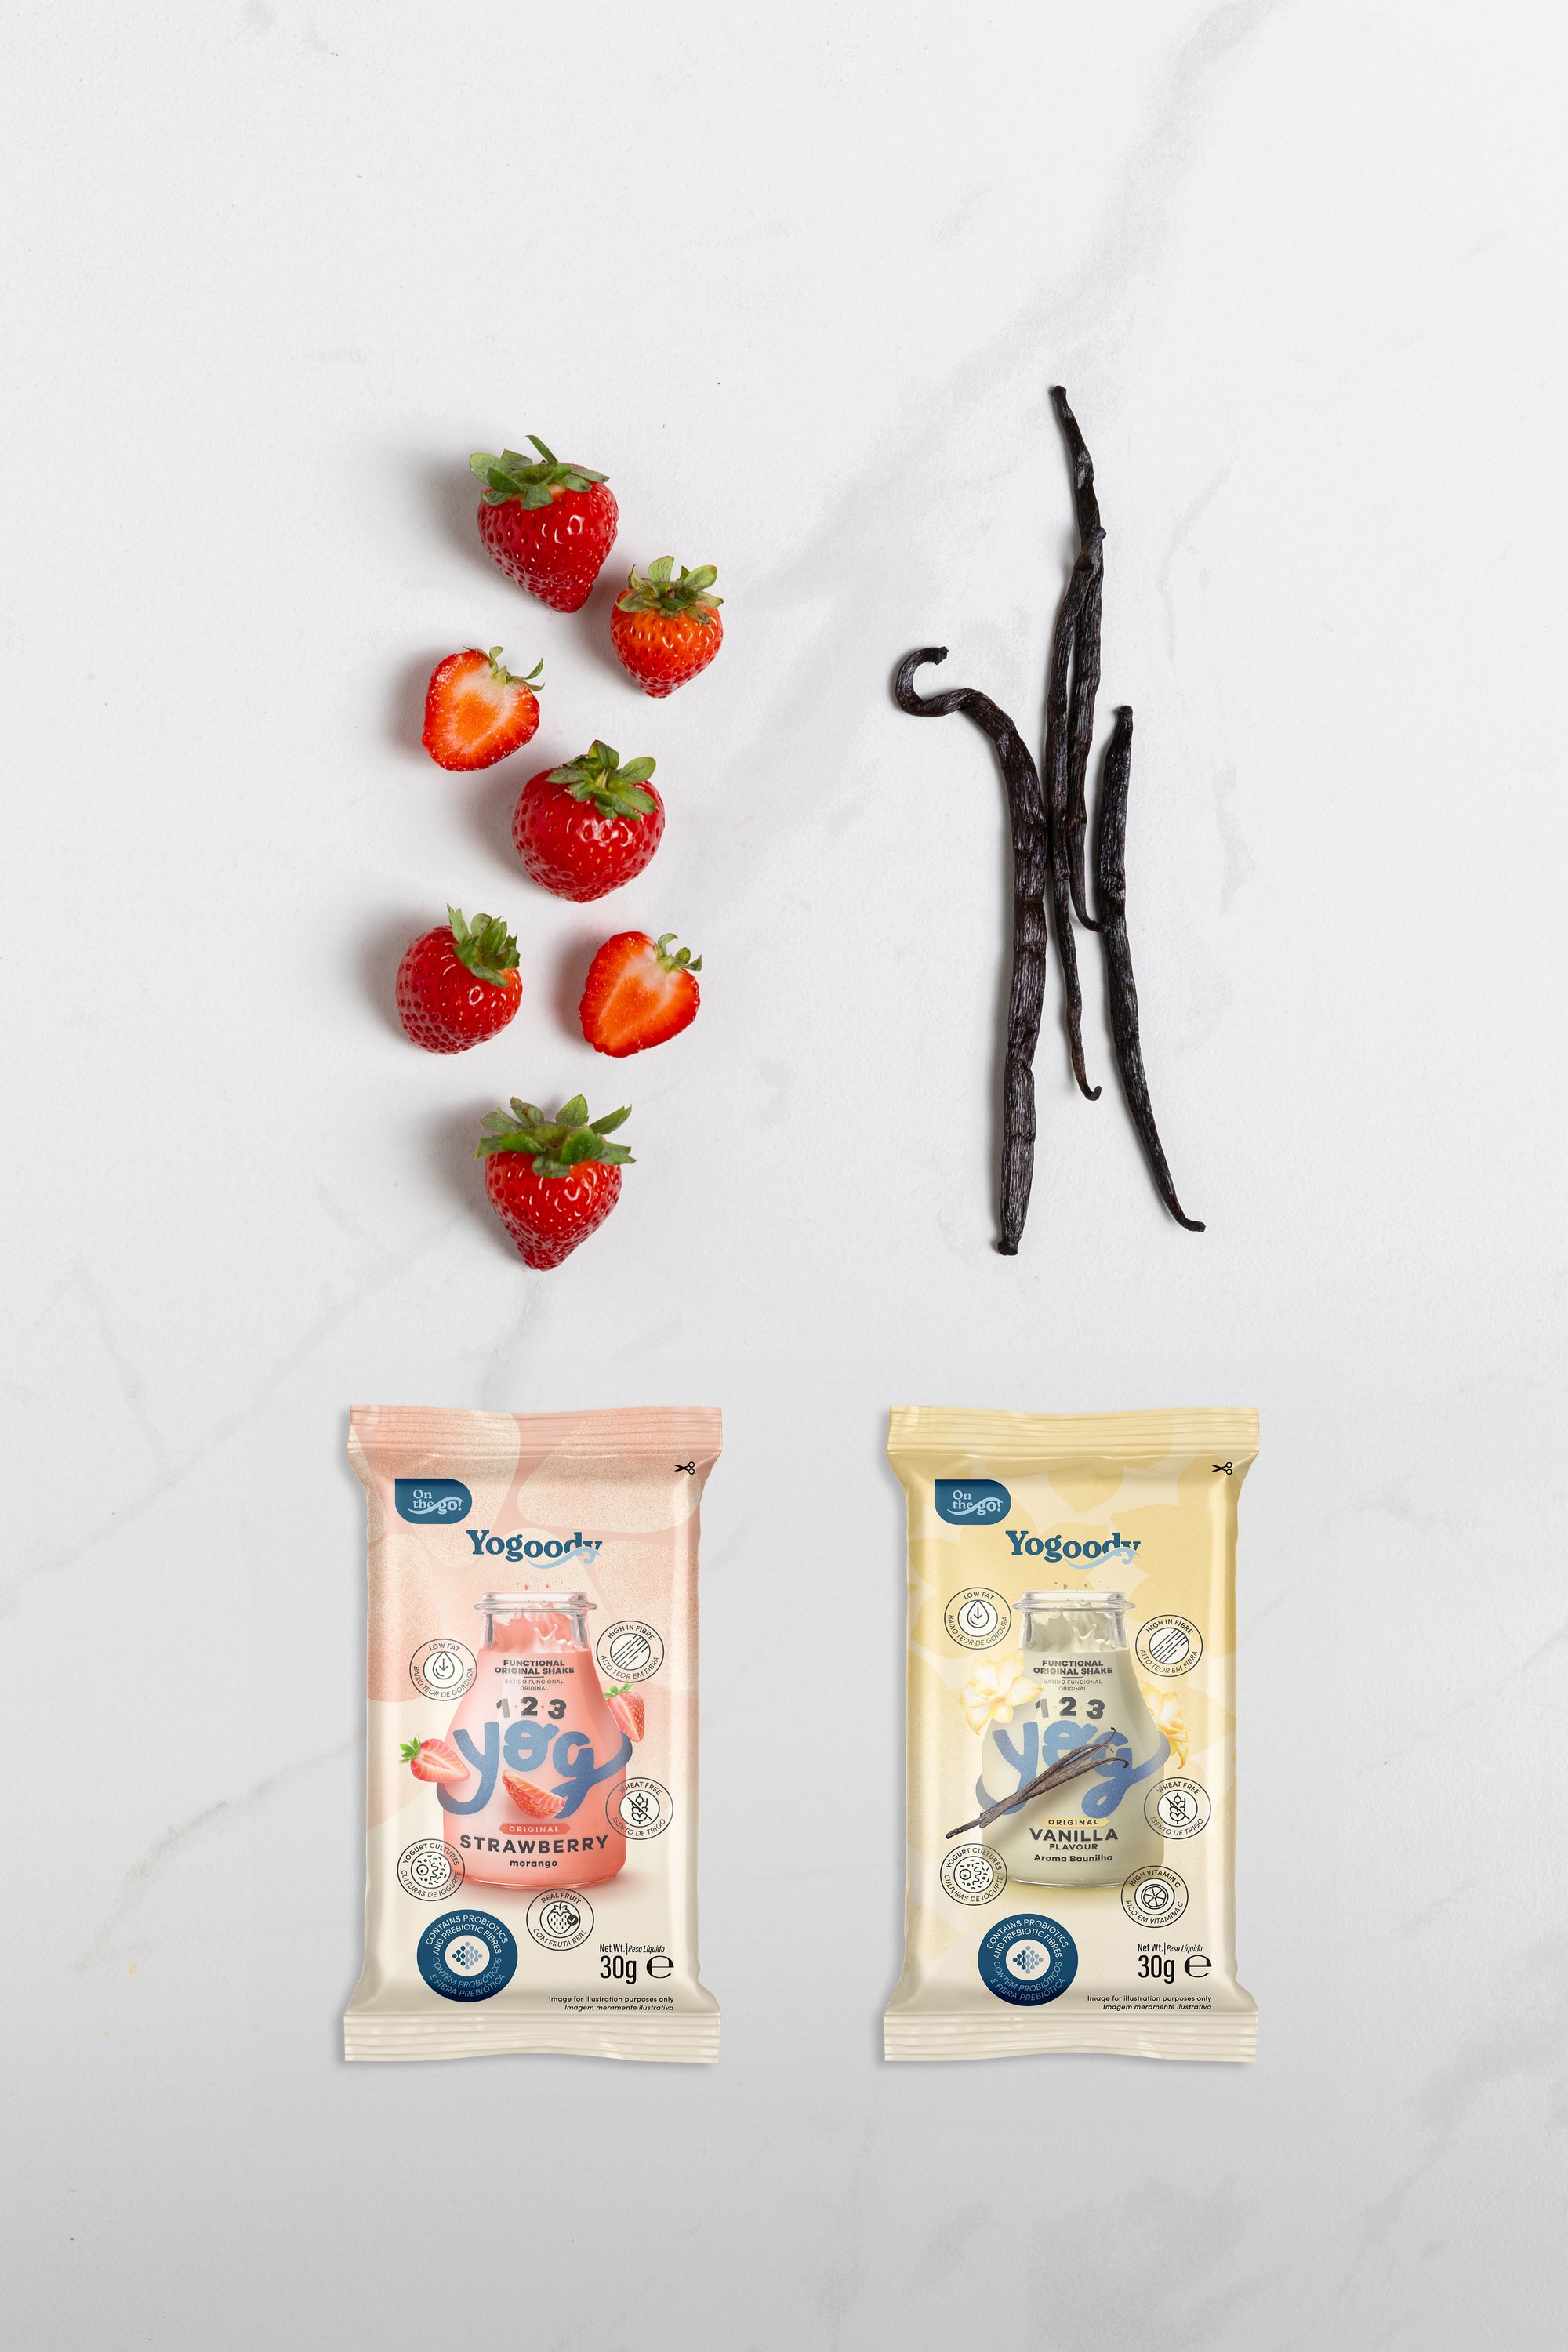 Welcome Pack - 1.2.3. YOG Original Strawberry and Vanilla Flavoured Shakes (10 x 30g sachets + FREE shaker)